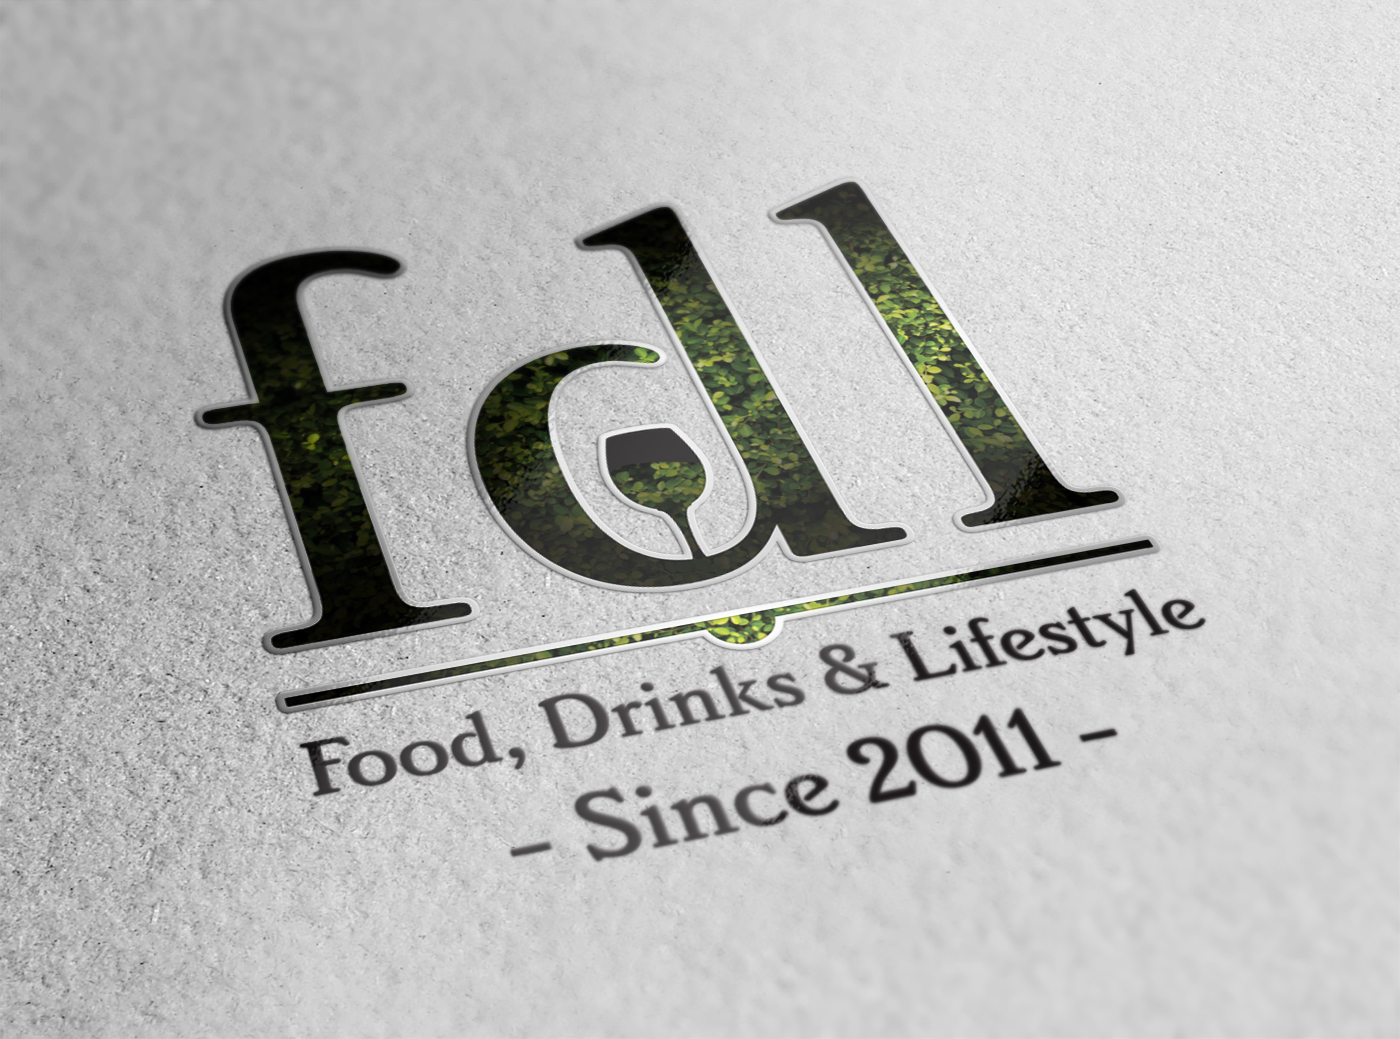 jose castro fdl Food  drinks lyfestyle Portugal porto downtown design graphic portuguese corporate identity print